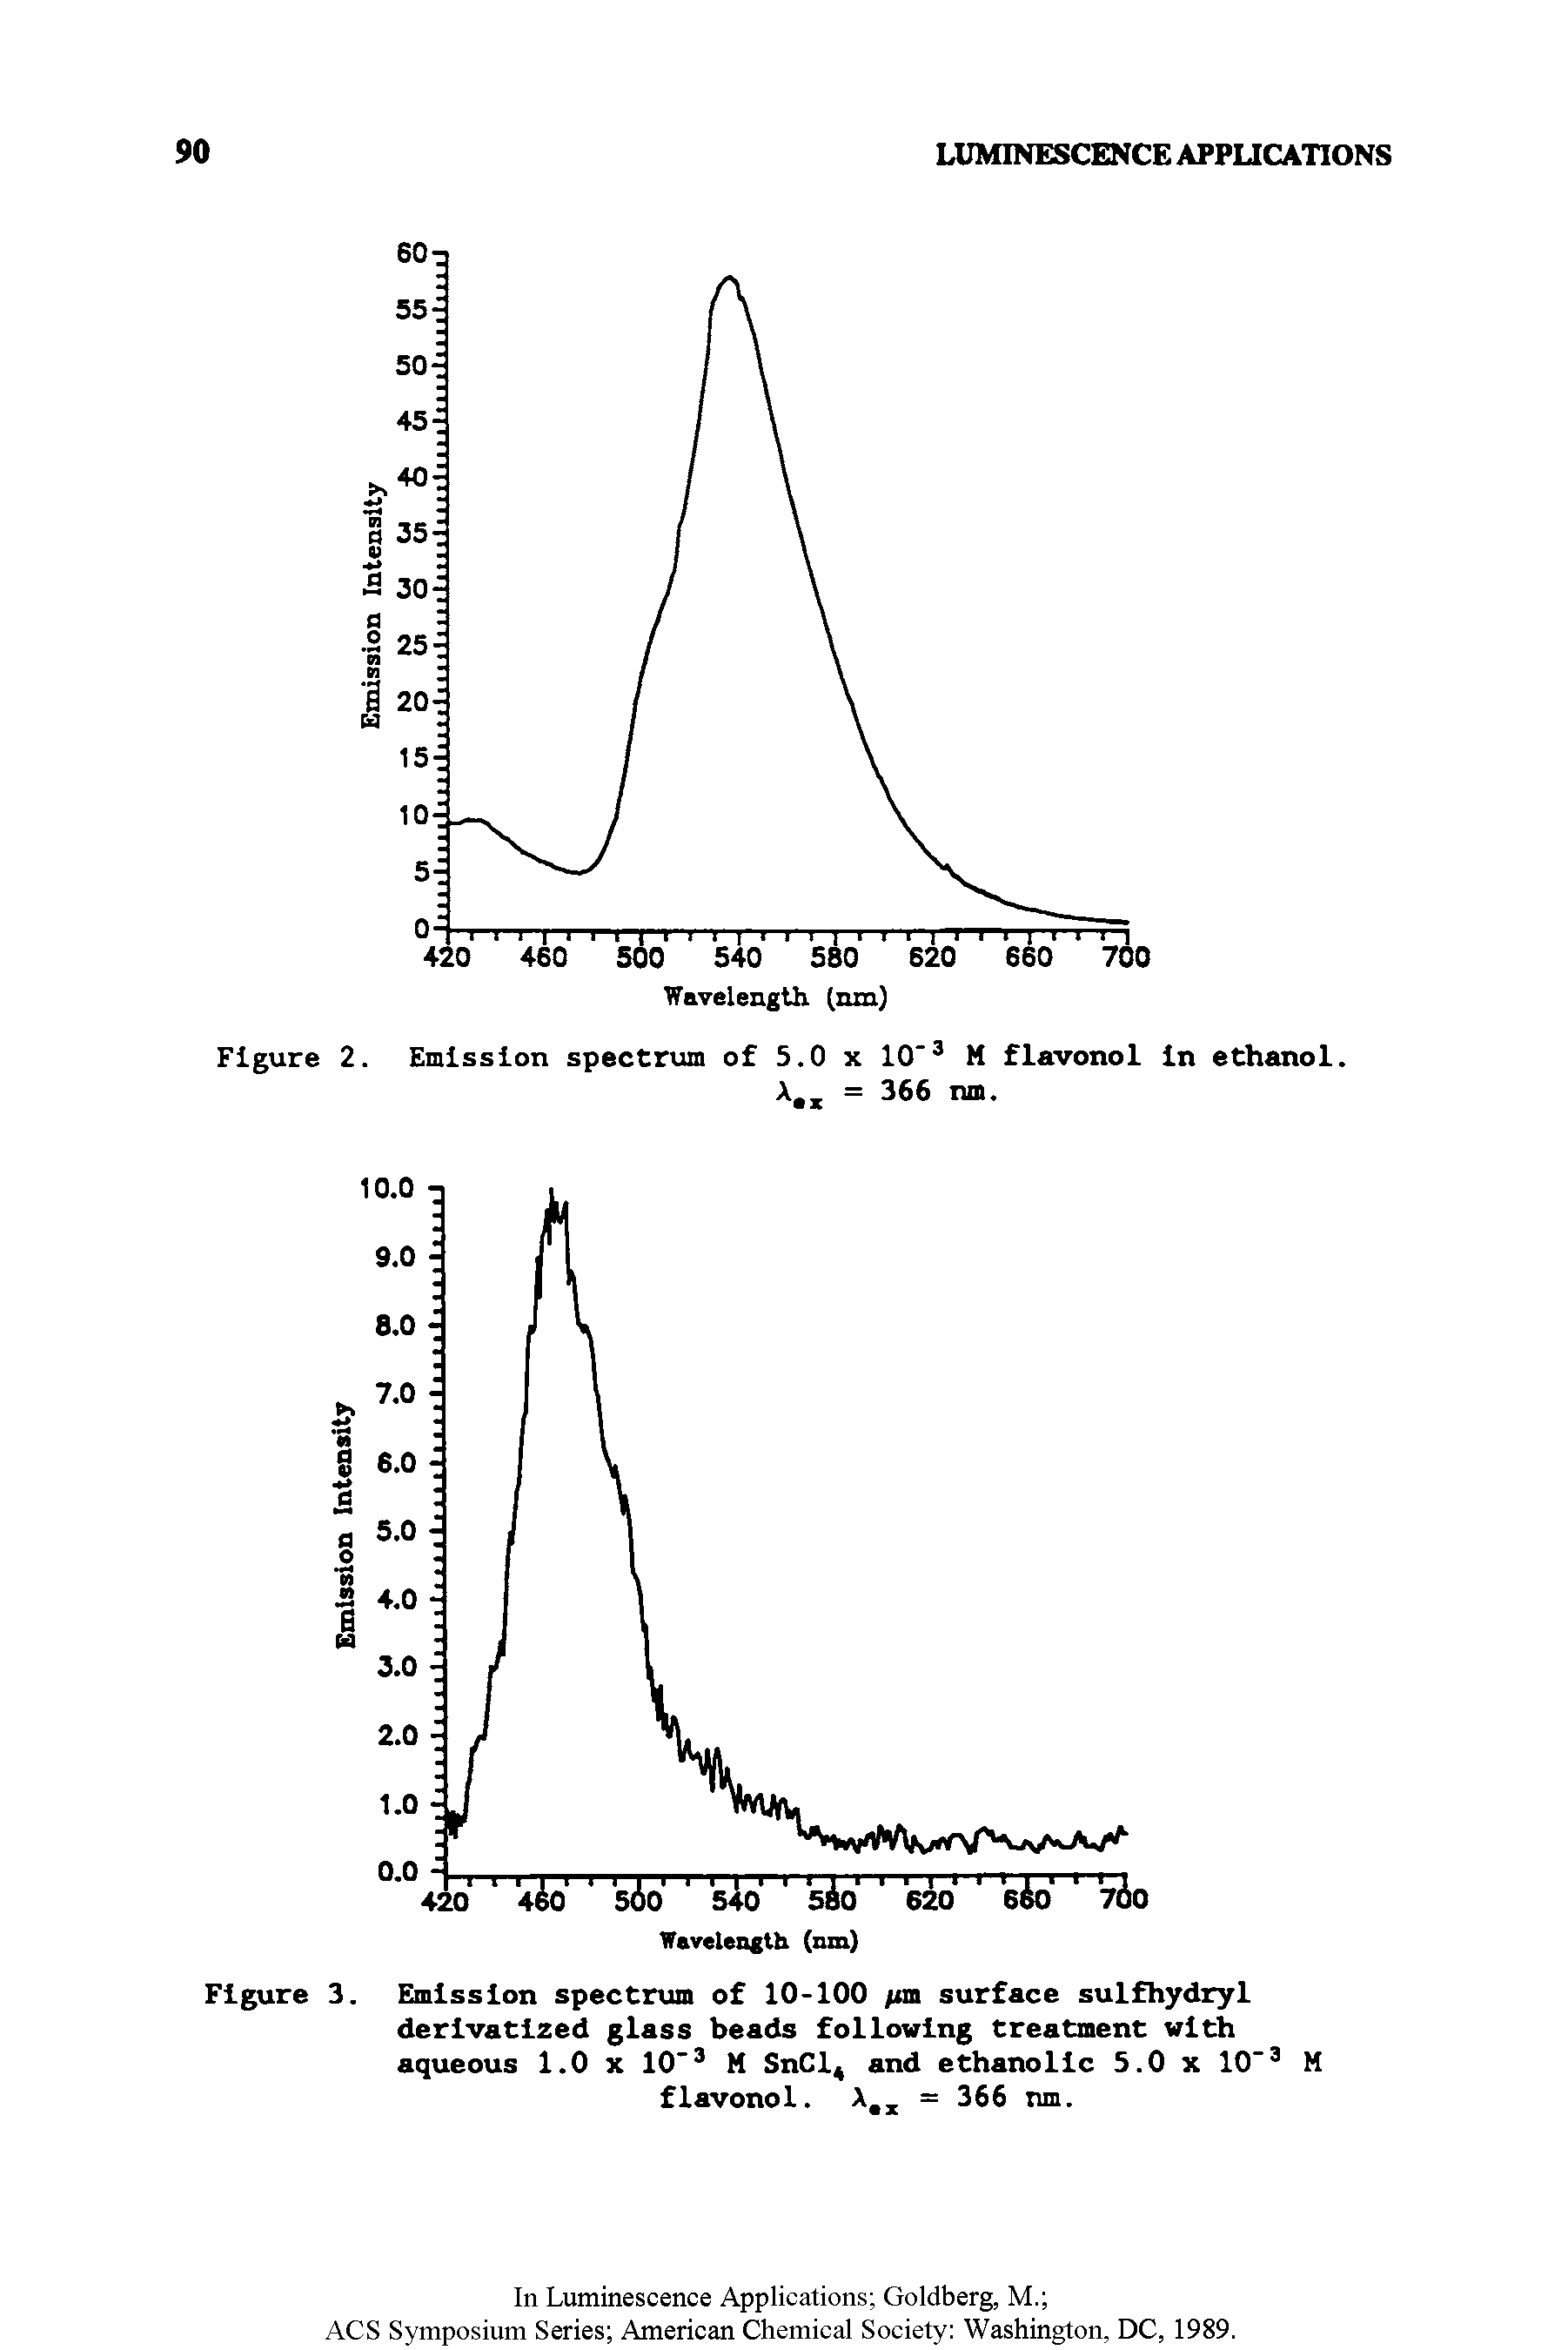 Figure 3. Emission spectrum of 10-100 fm surface sulfhydryl derlvatlzed glass beads following treatment with aqueous 1.0 x 10 M SnCl and ethanollc 5.0 x 10 M flavonol.